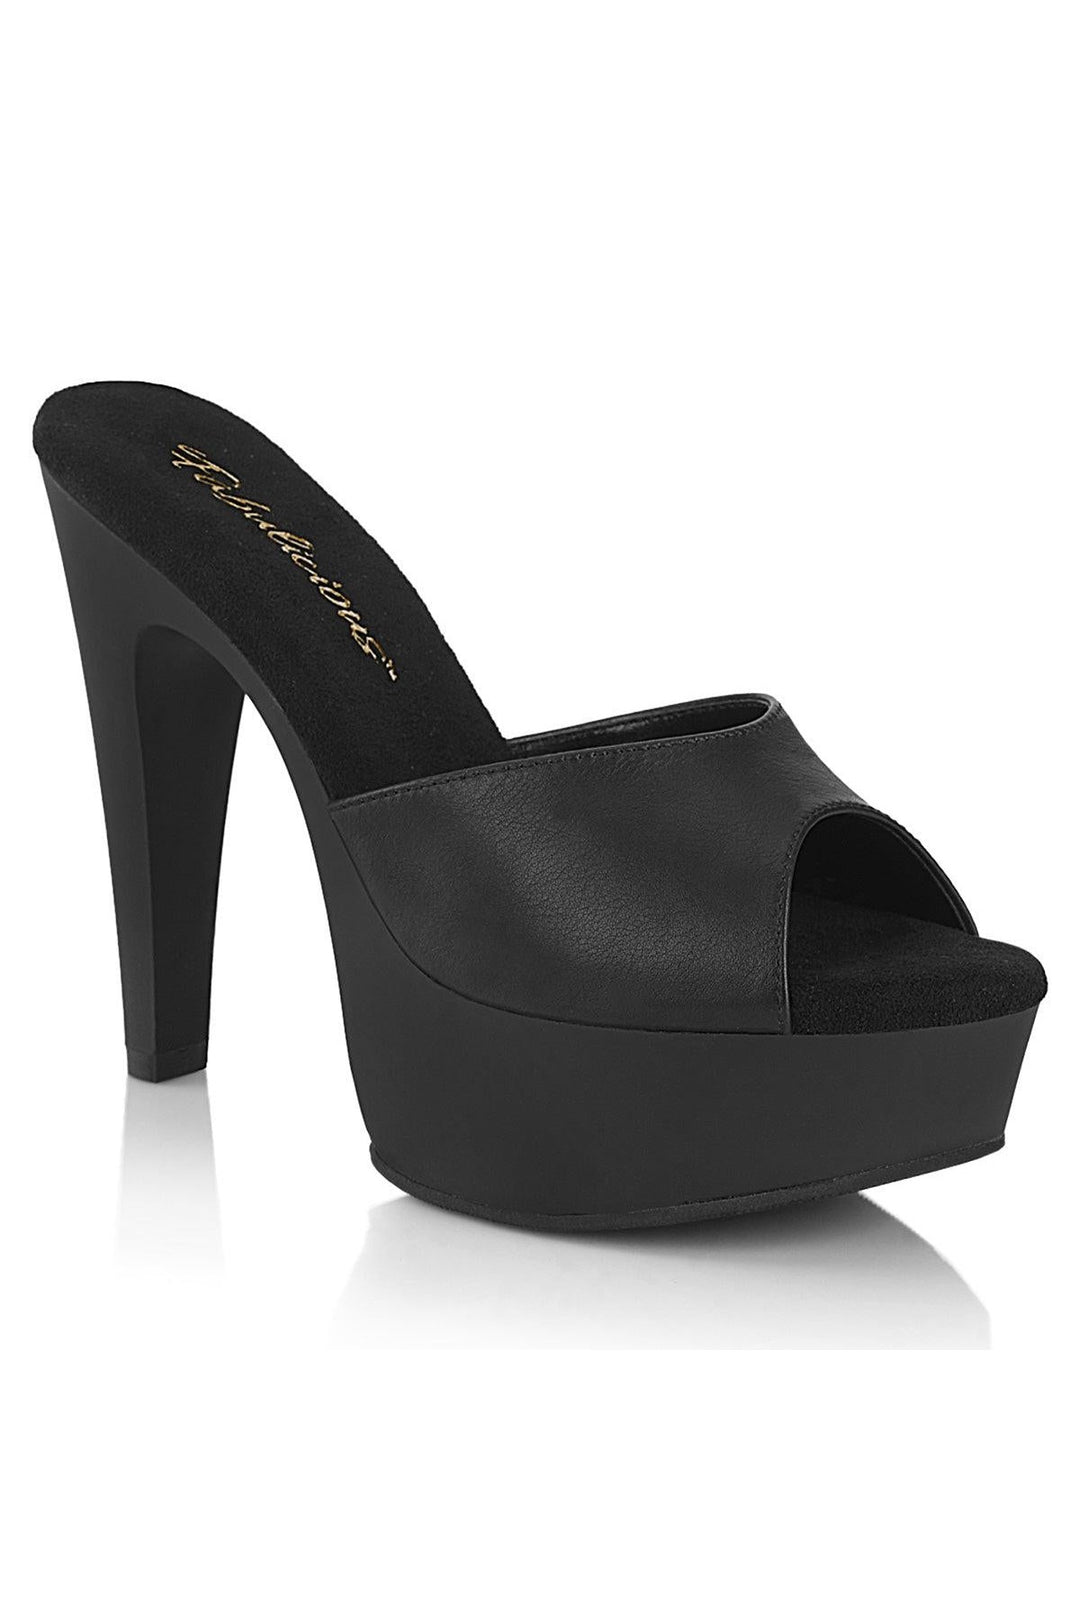 Fabulicious Black Slides Platform Stripper Shoes | Buy at Sexyshoes.com